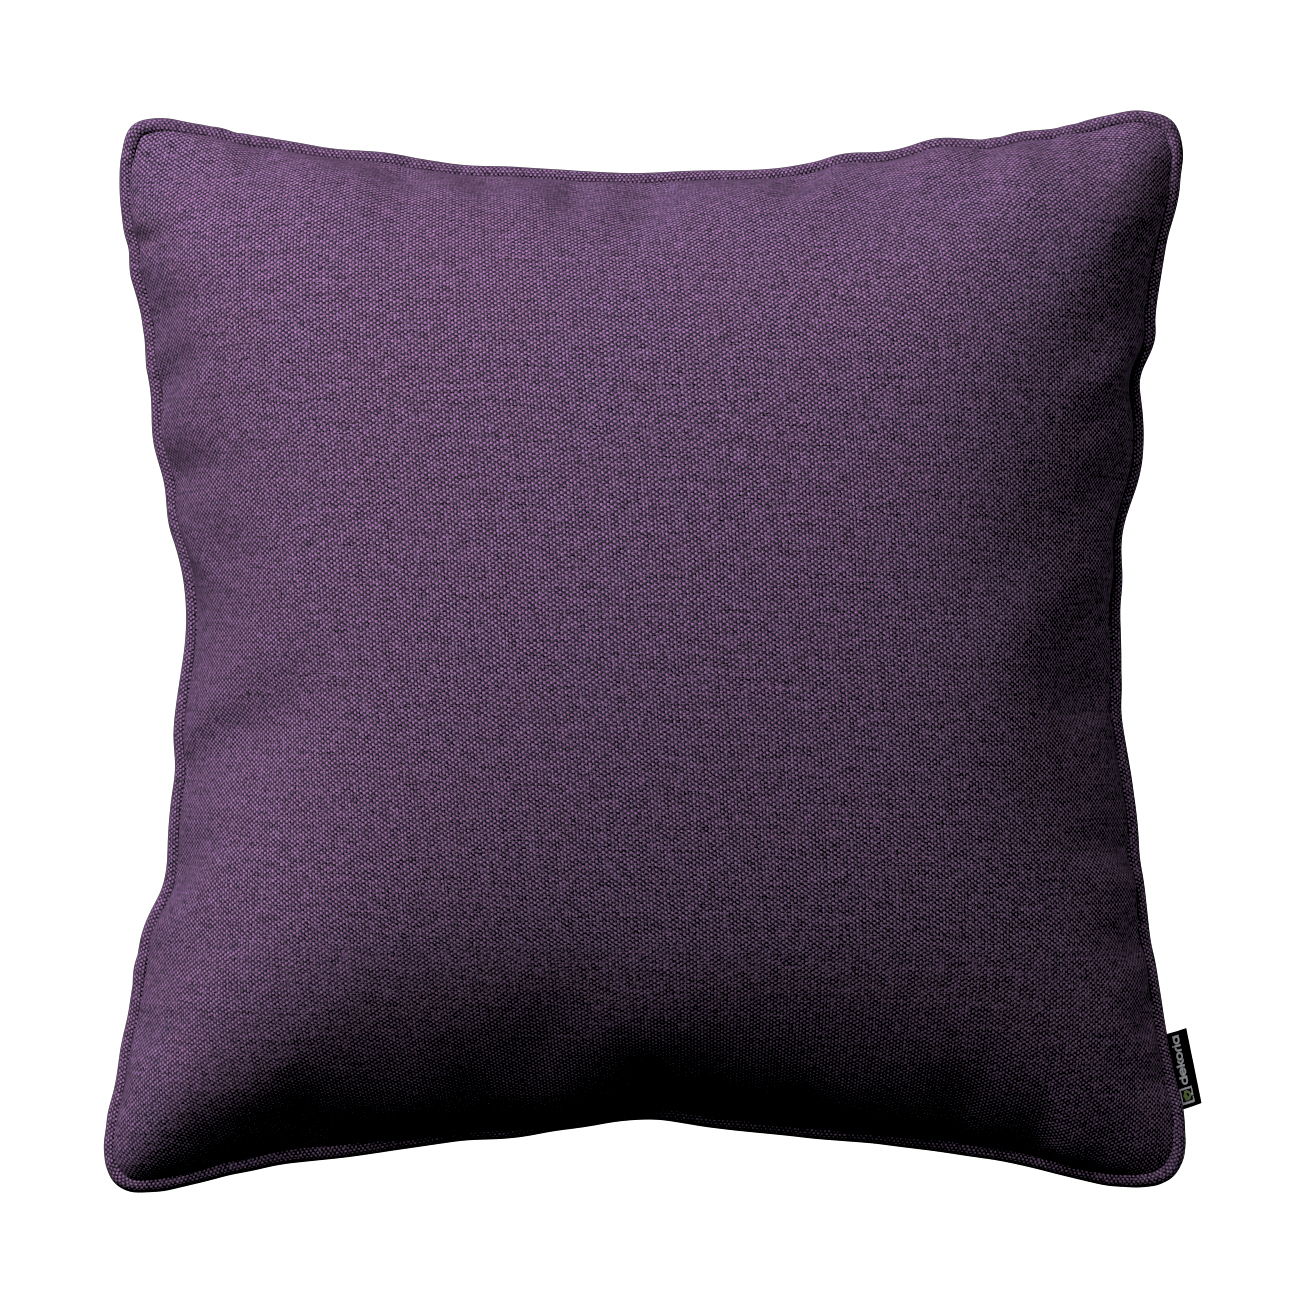 Kissenhülle Gabi mit Paspel, violett, 60 x 60 cm, Etna (161-27) günstig online kaufen